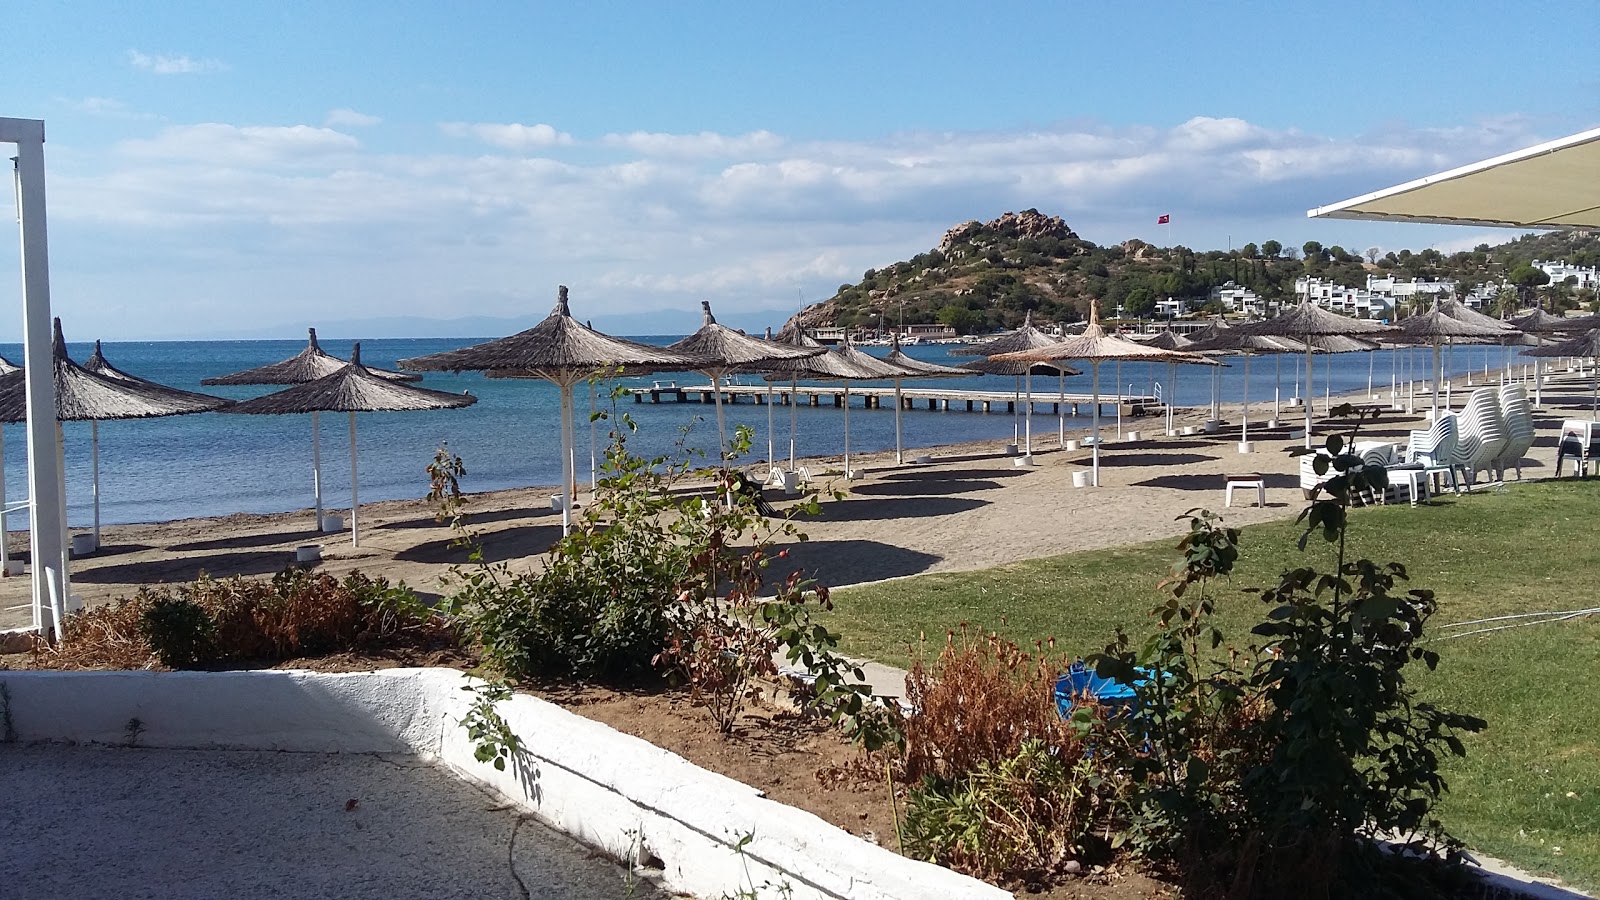 Foto de Guvercin Koyu beach - lugar popular entre os apreciadores de relaxamento